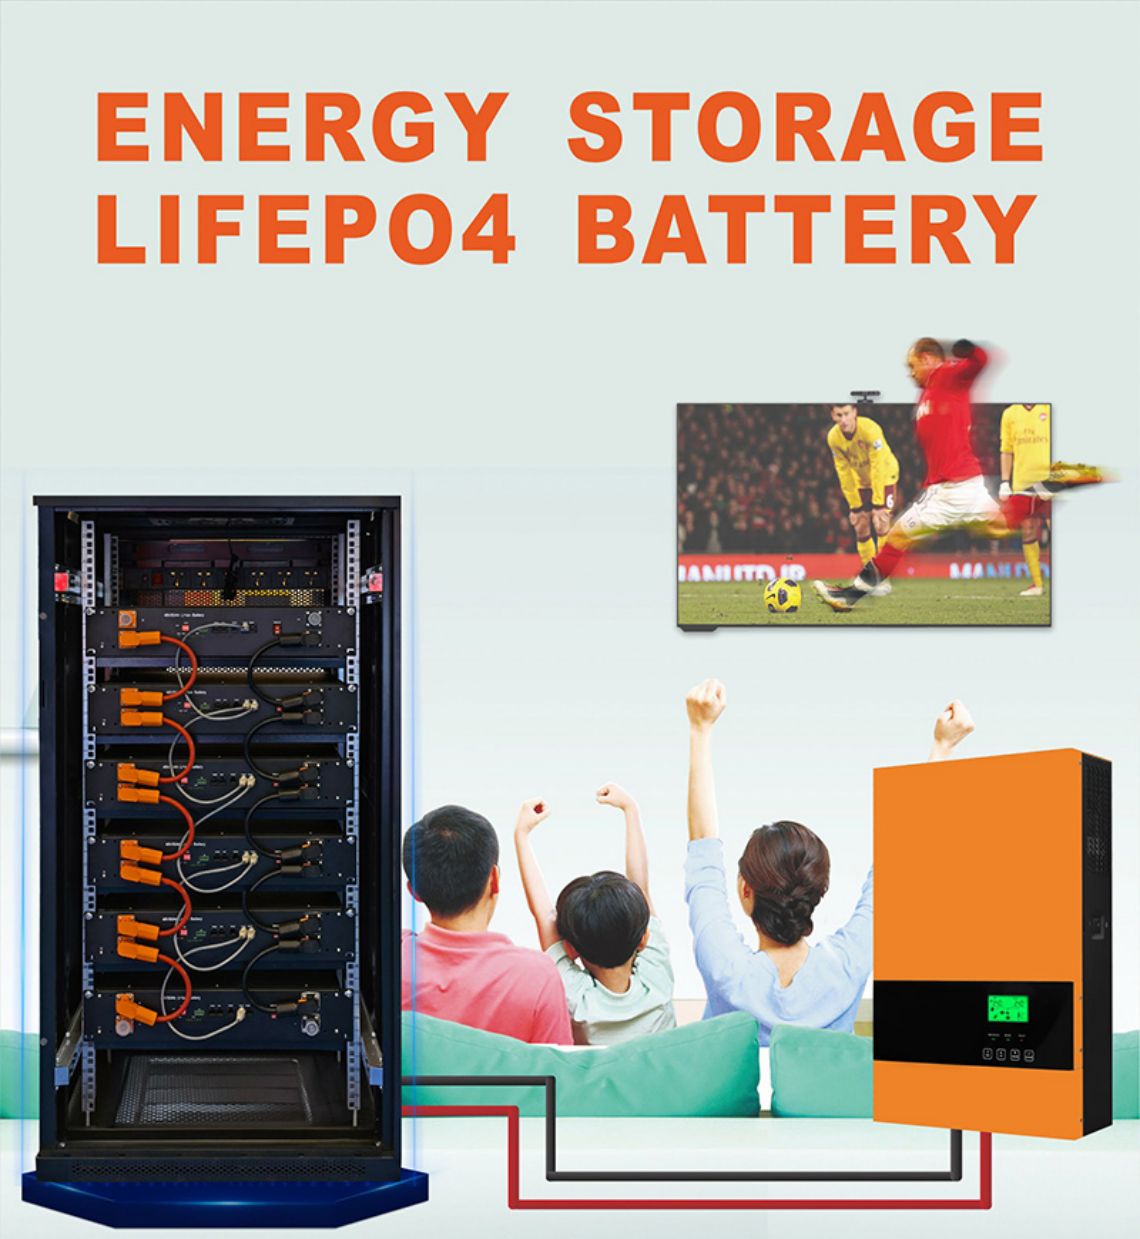 باتری لیتیومی ذخیره انرژی